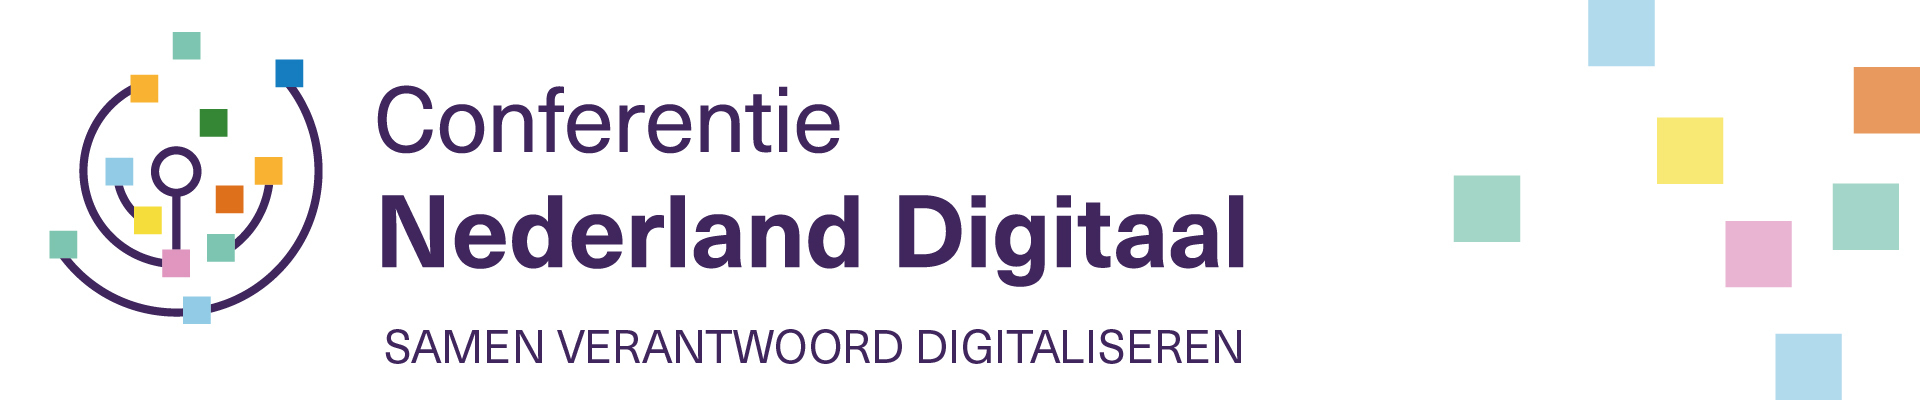 Conferentie Nederland Digitaal 2021